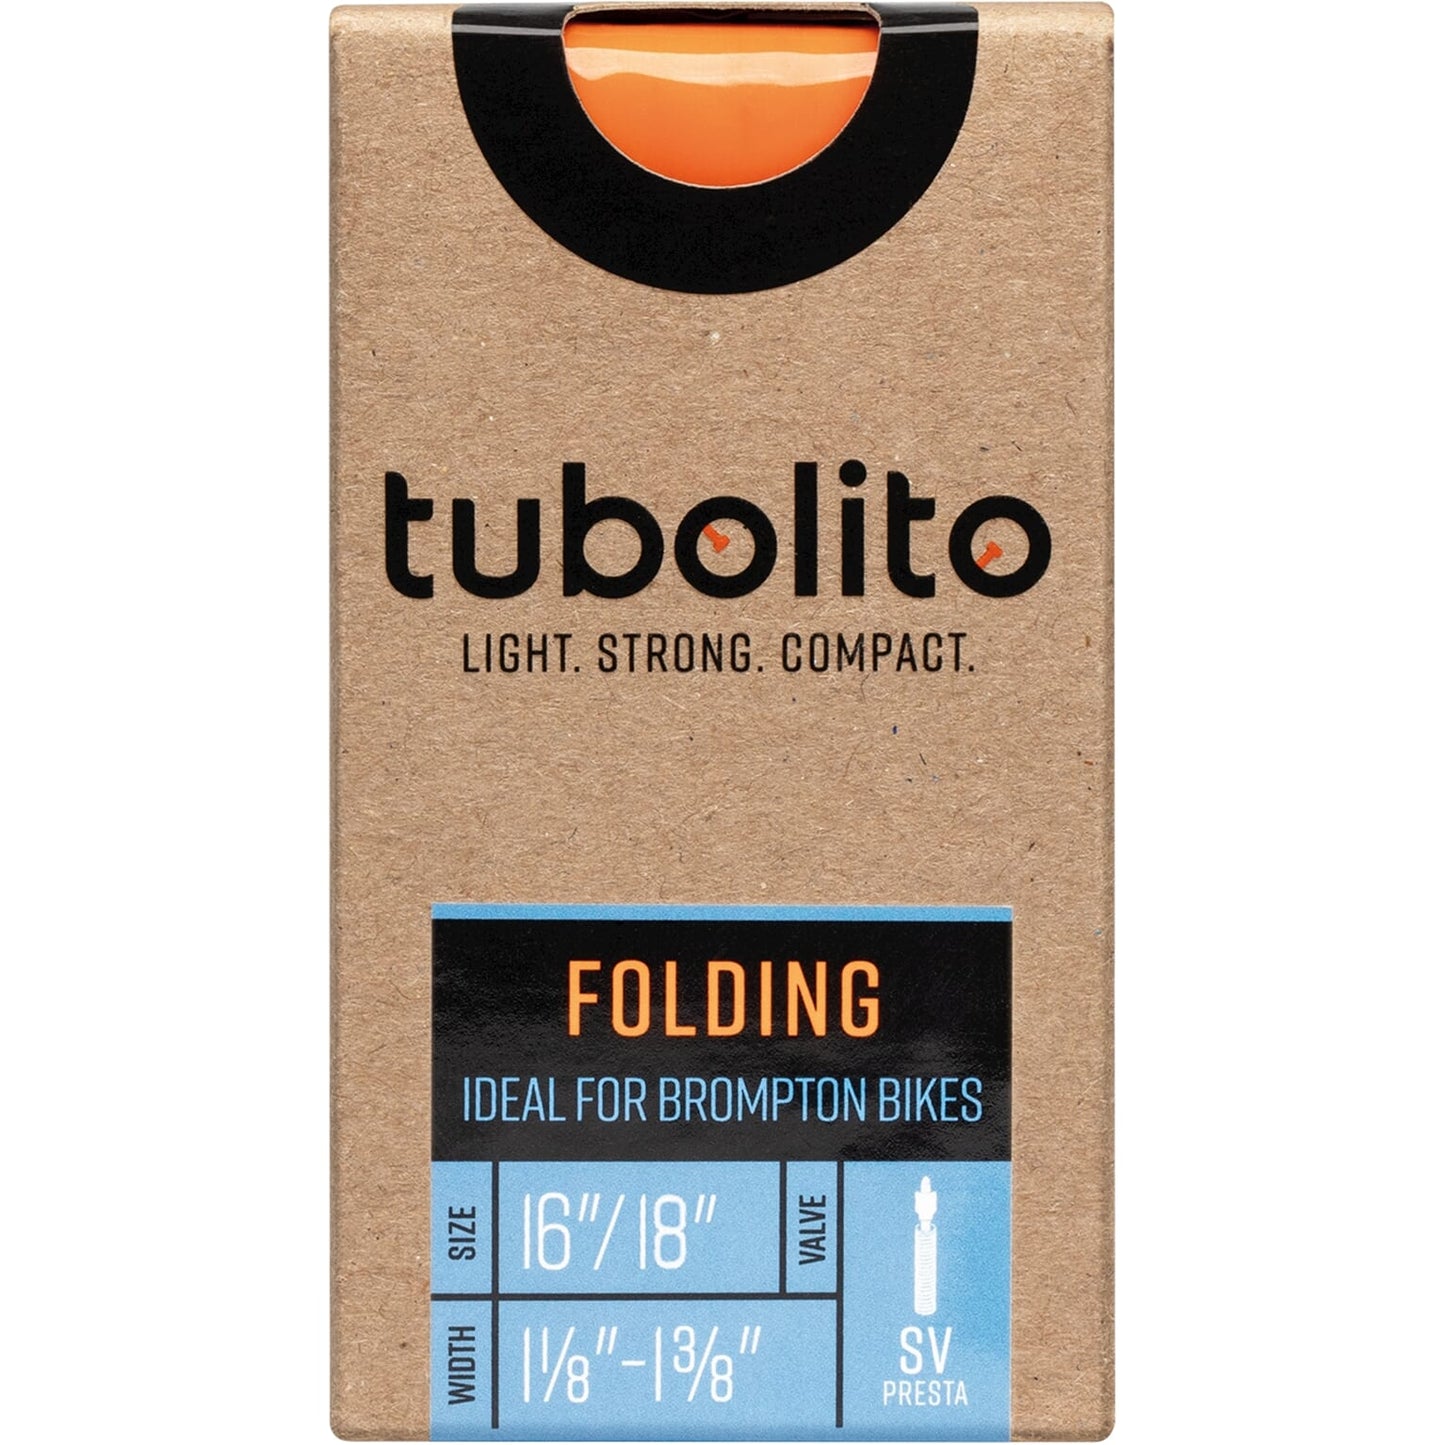 Tubolito Bnb Folding 16 18 x 1 1 8 -1 3 8 fv 42mm